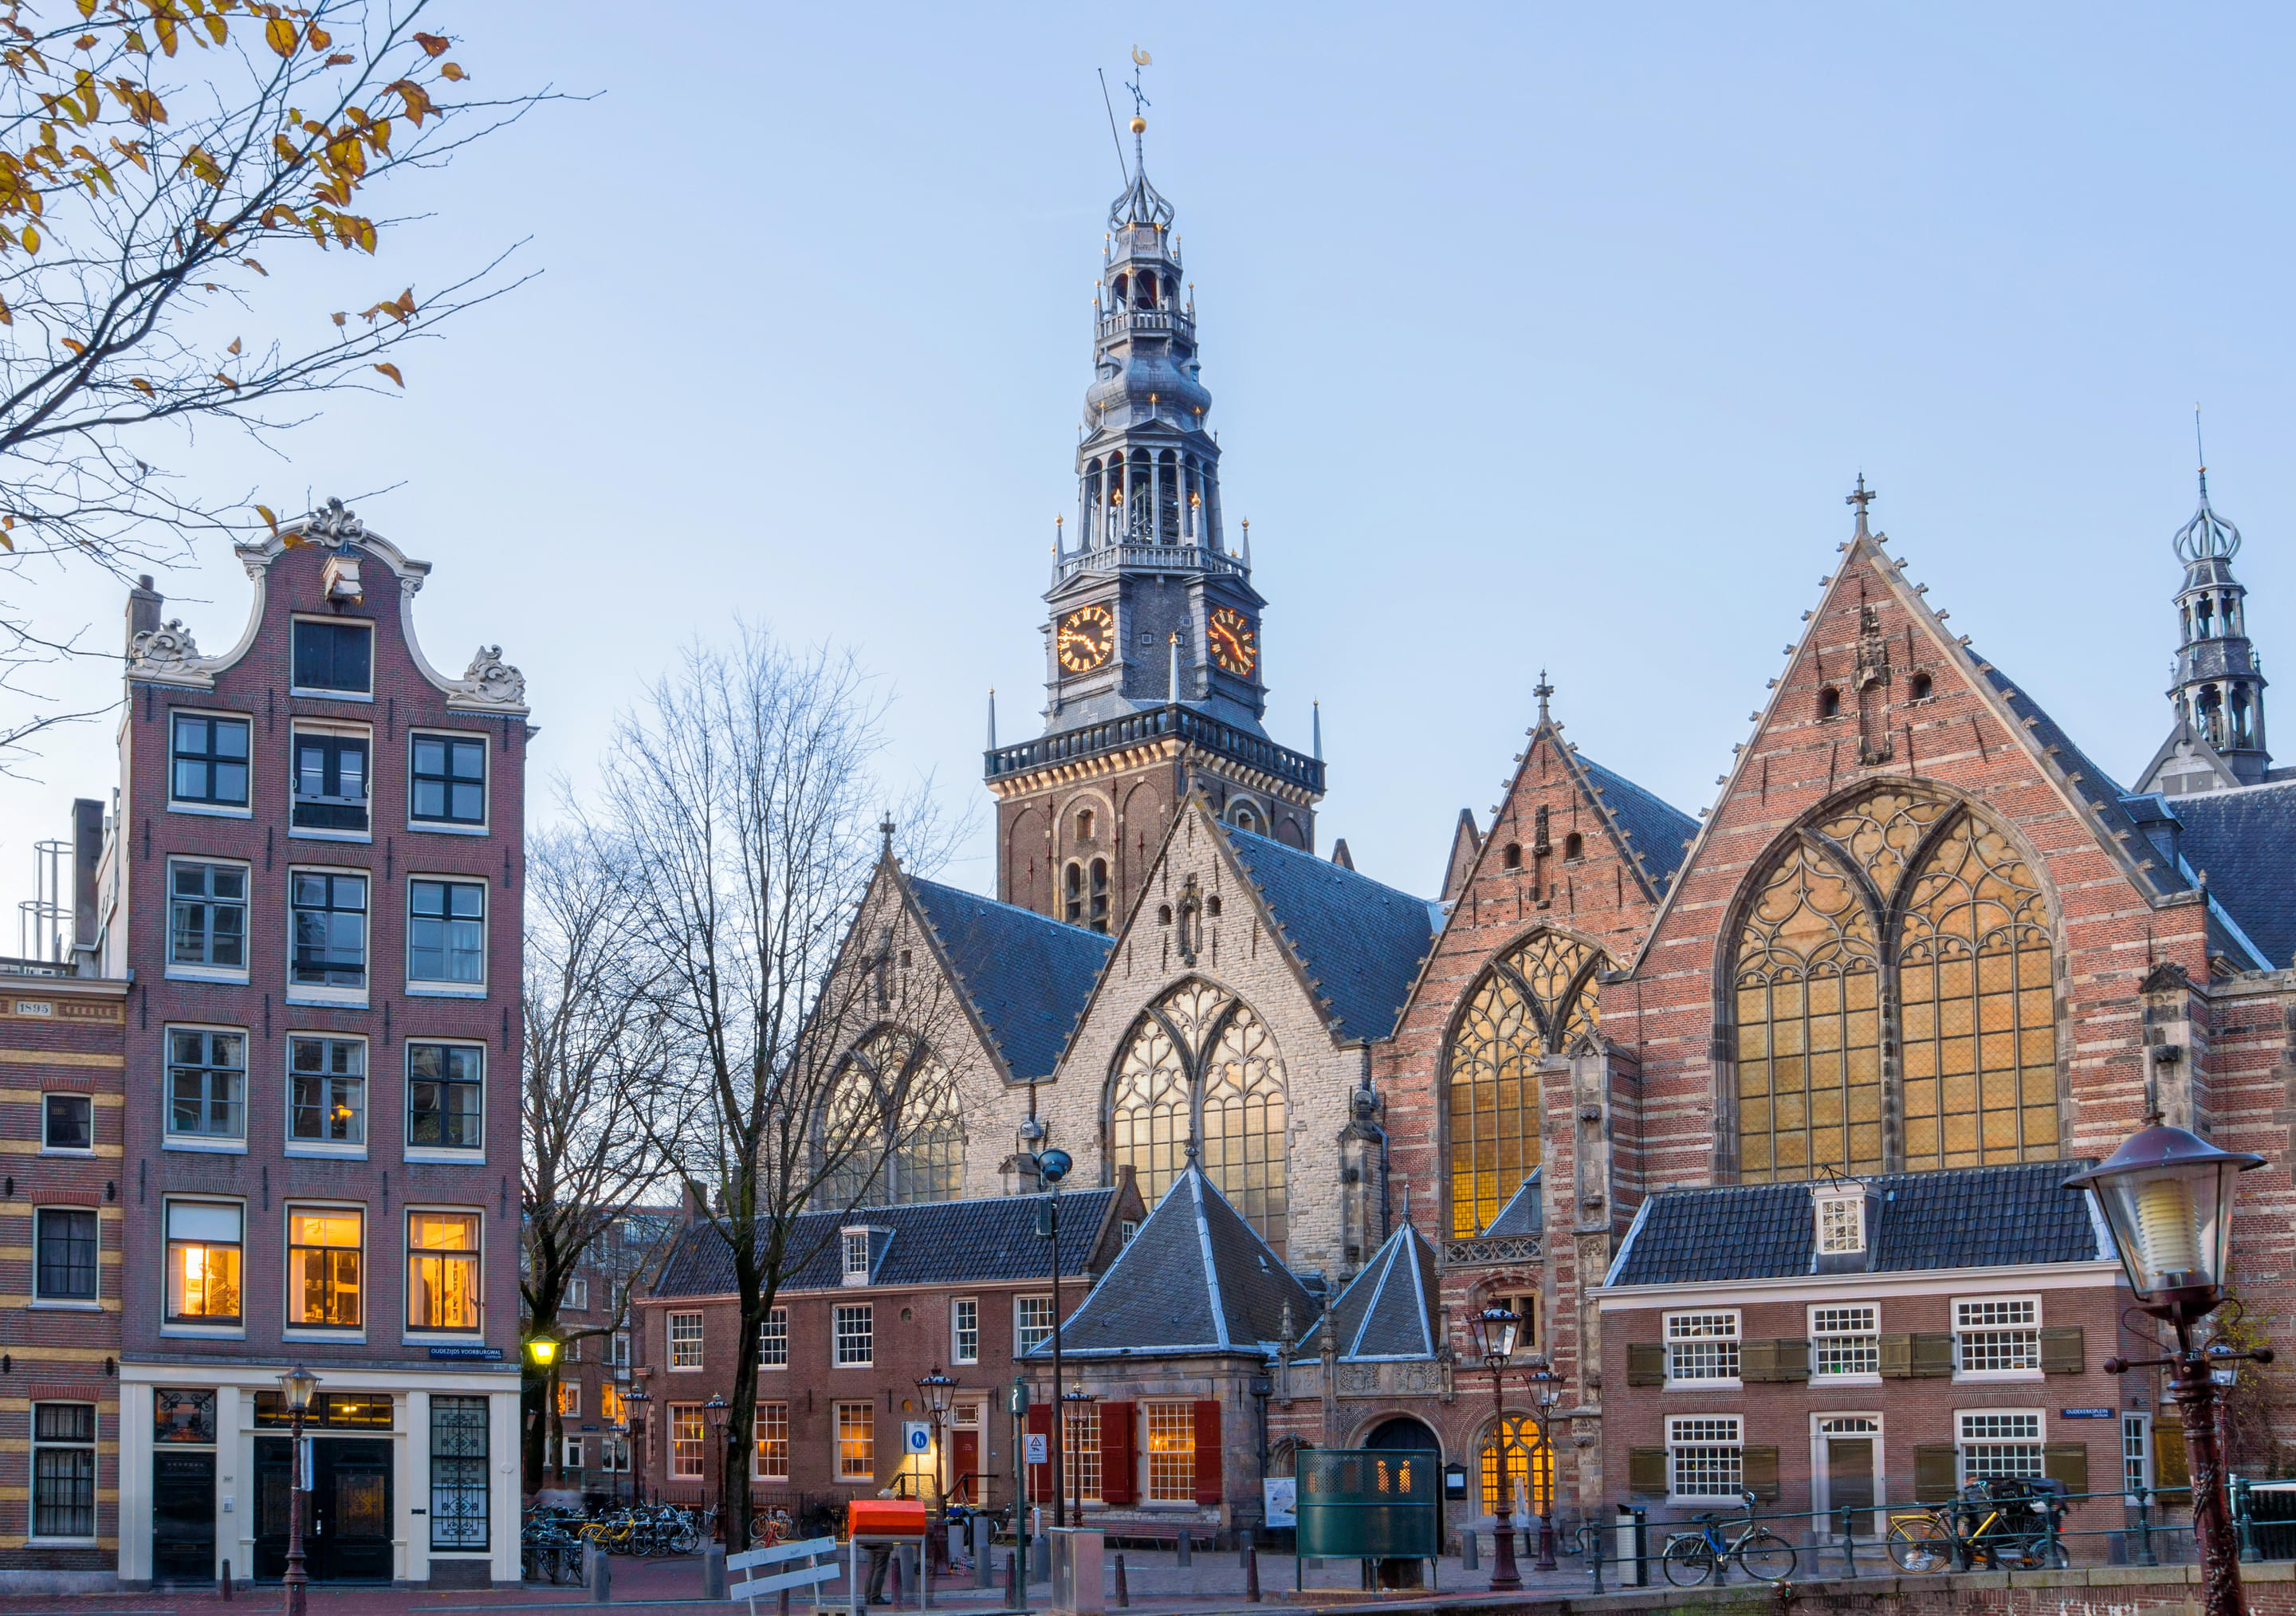 Oude Kerk Overview